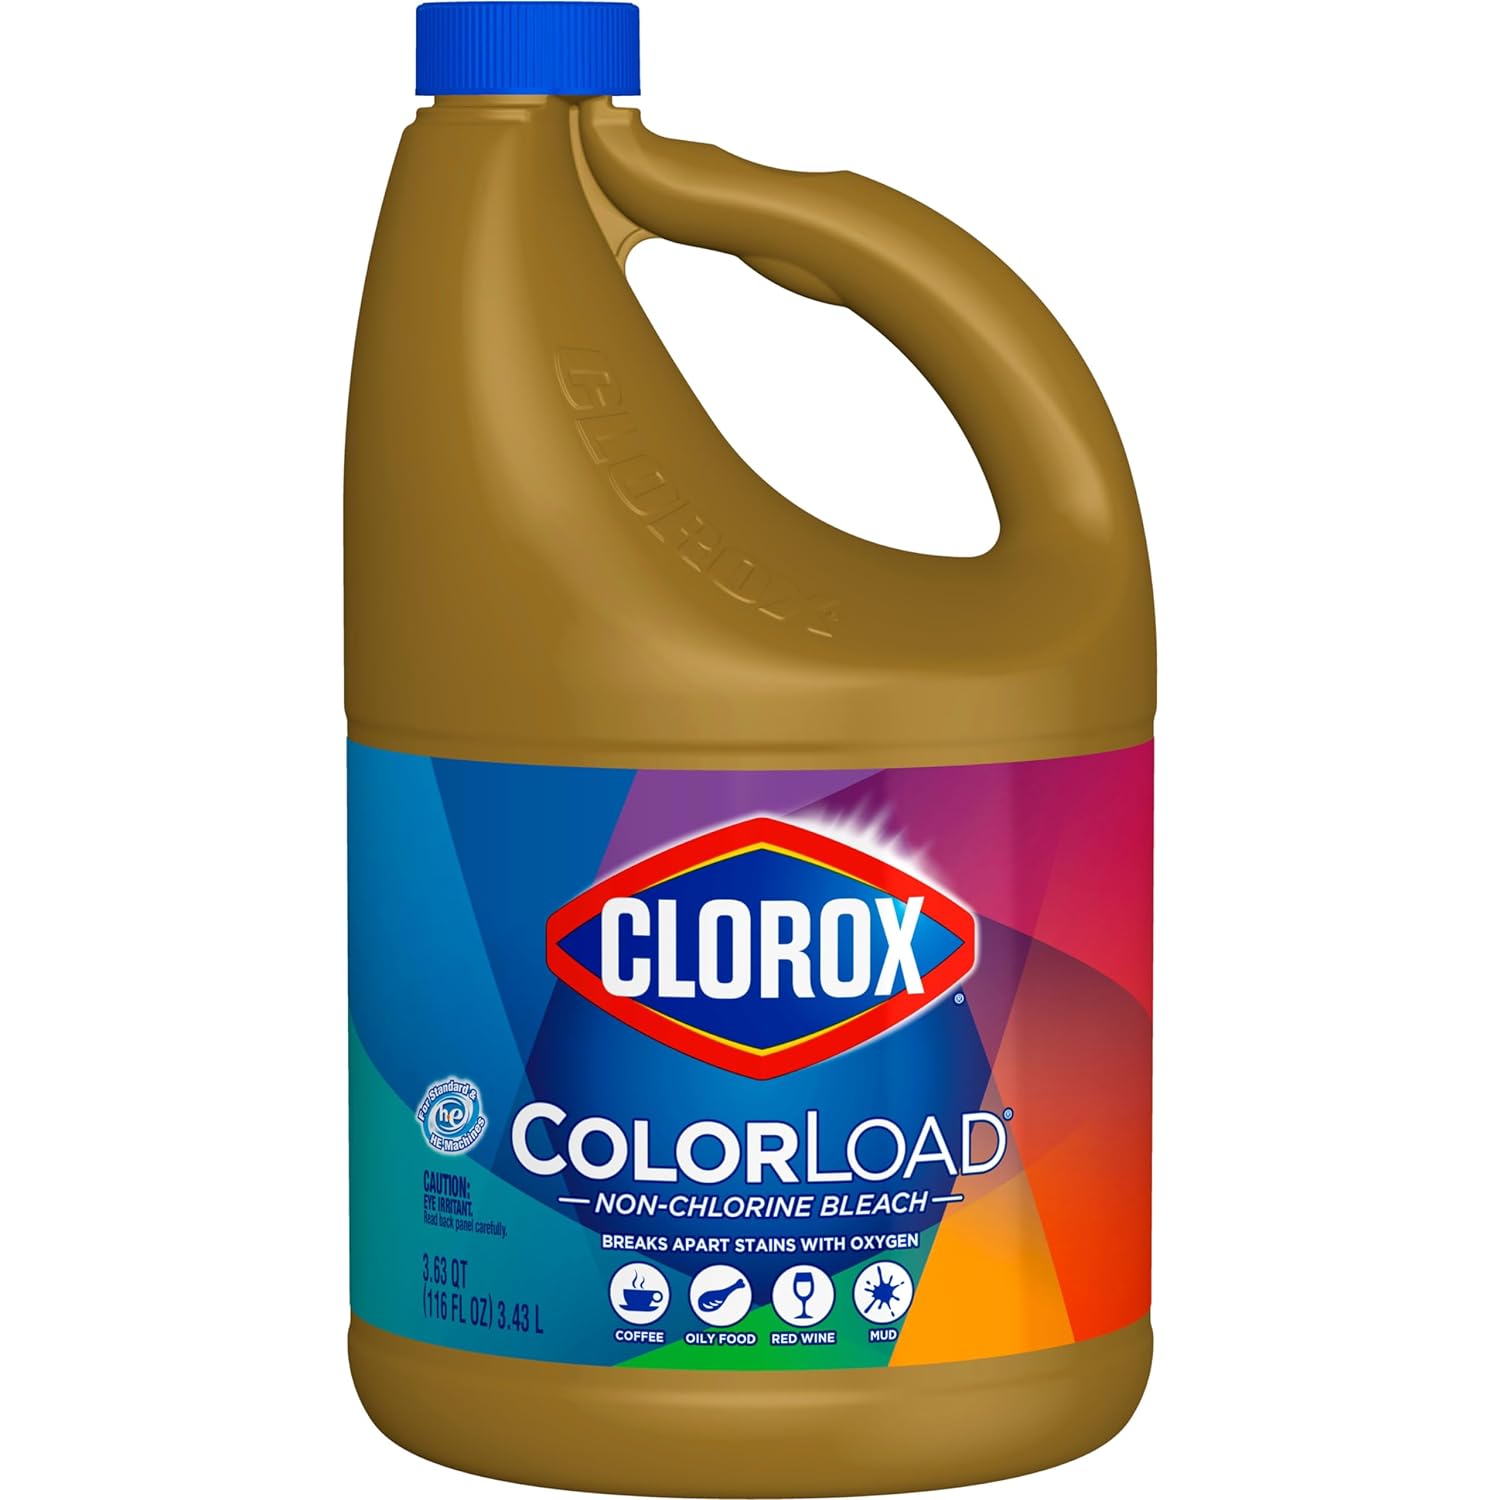 Clorox ColorLoad Non-Chlorine Bleach, 116 Ounce Bottle